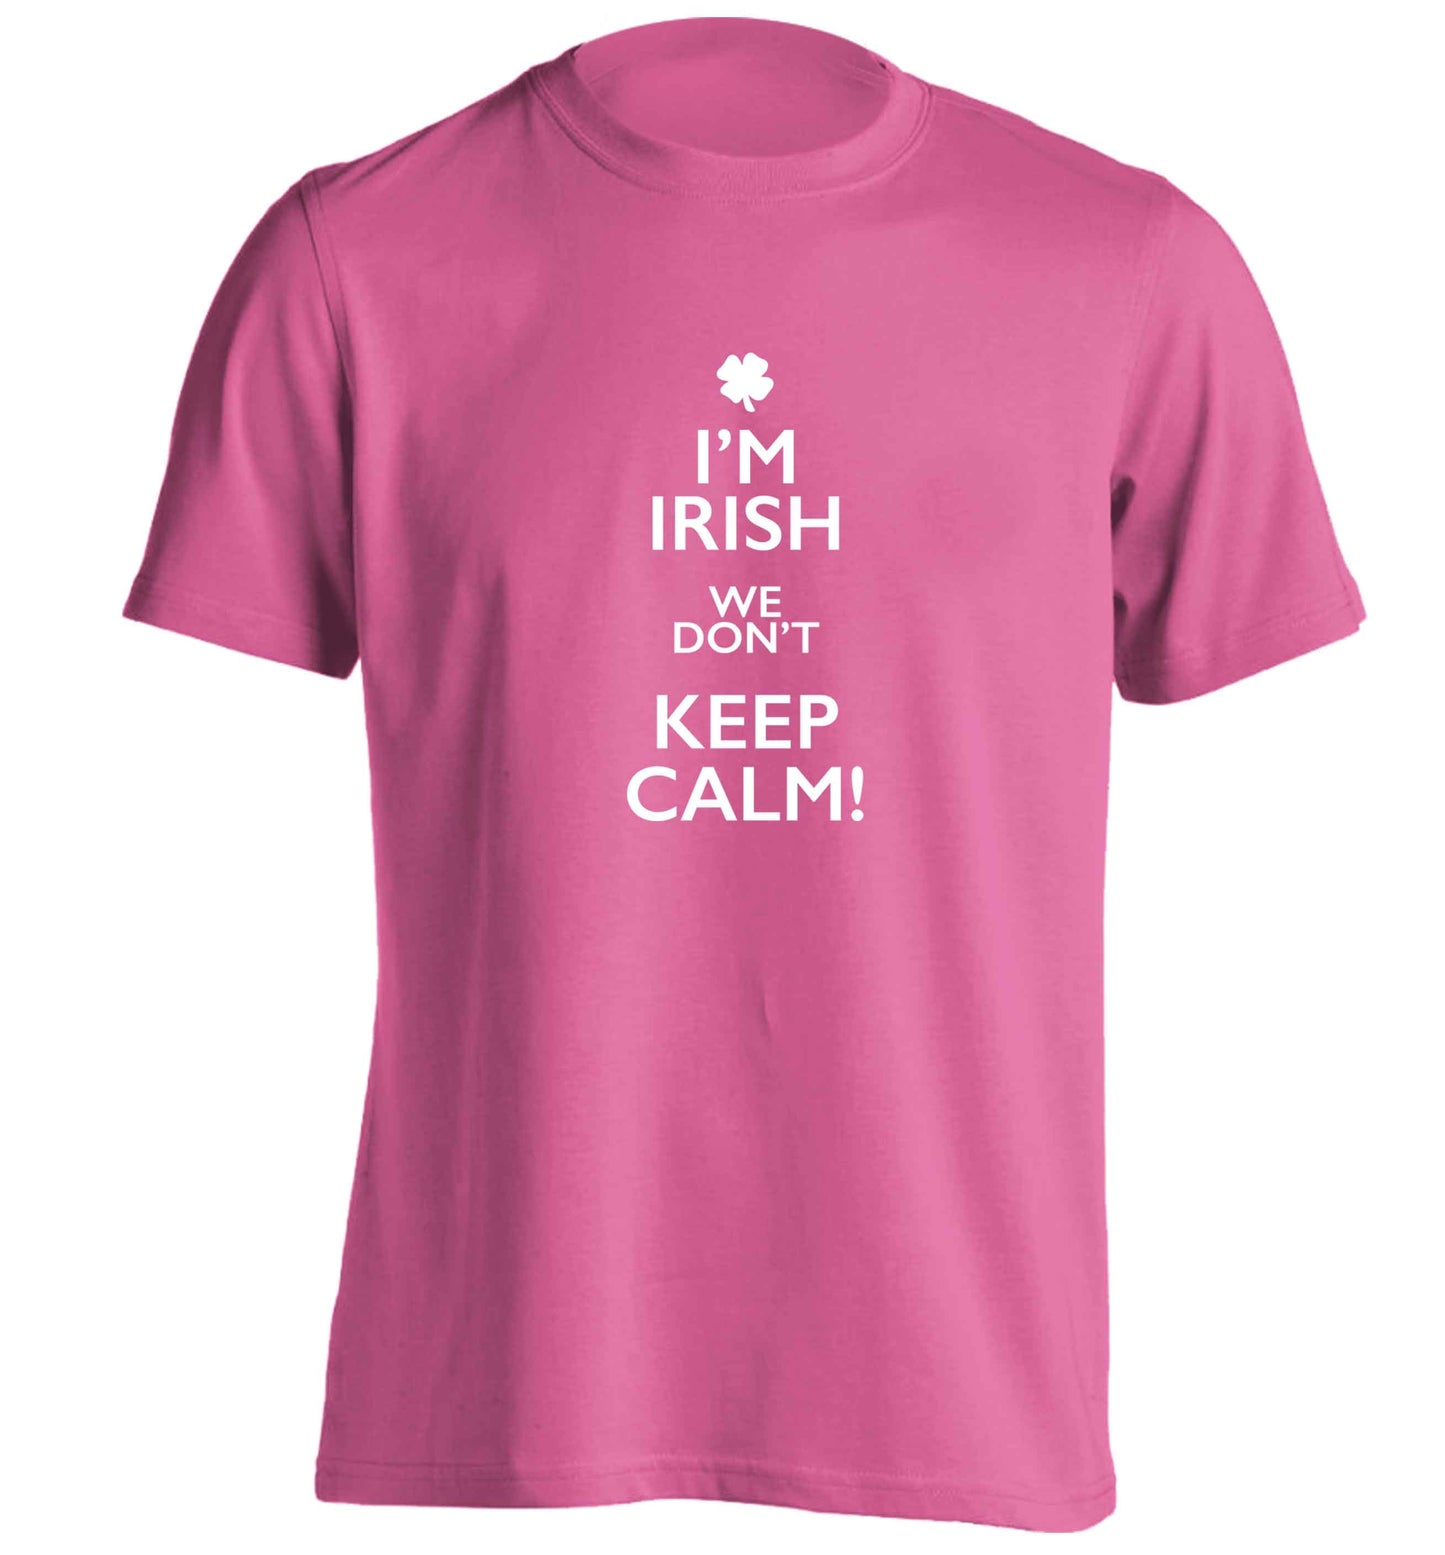 I'm Irish we don't keep calm adults unisex pink Tshirt 2XL